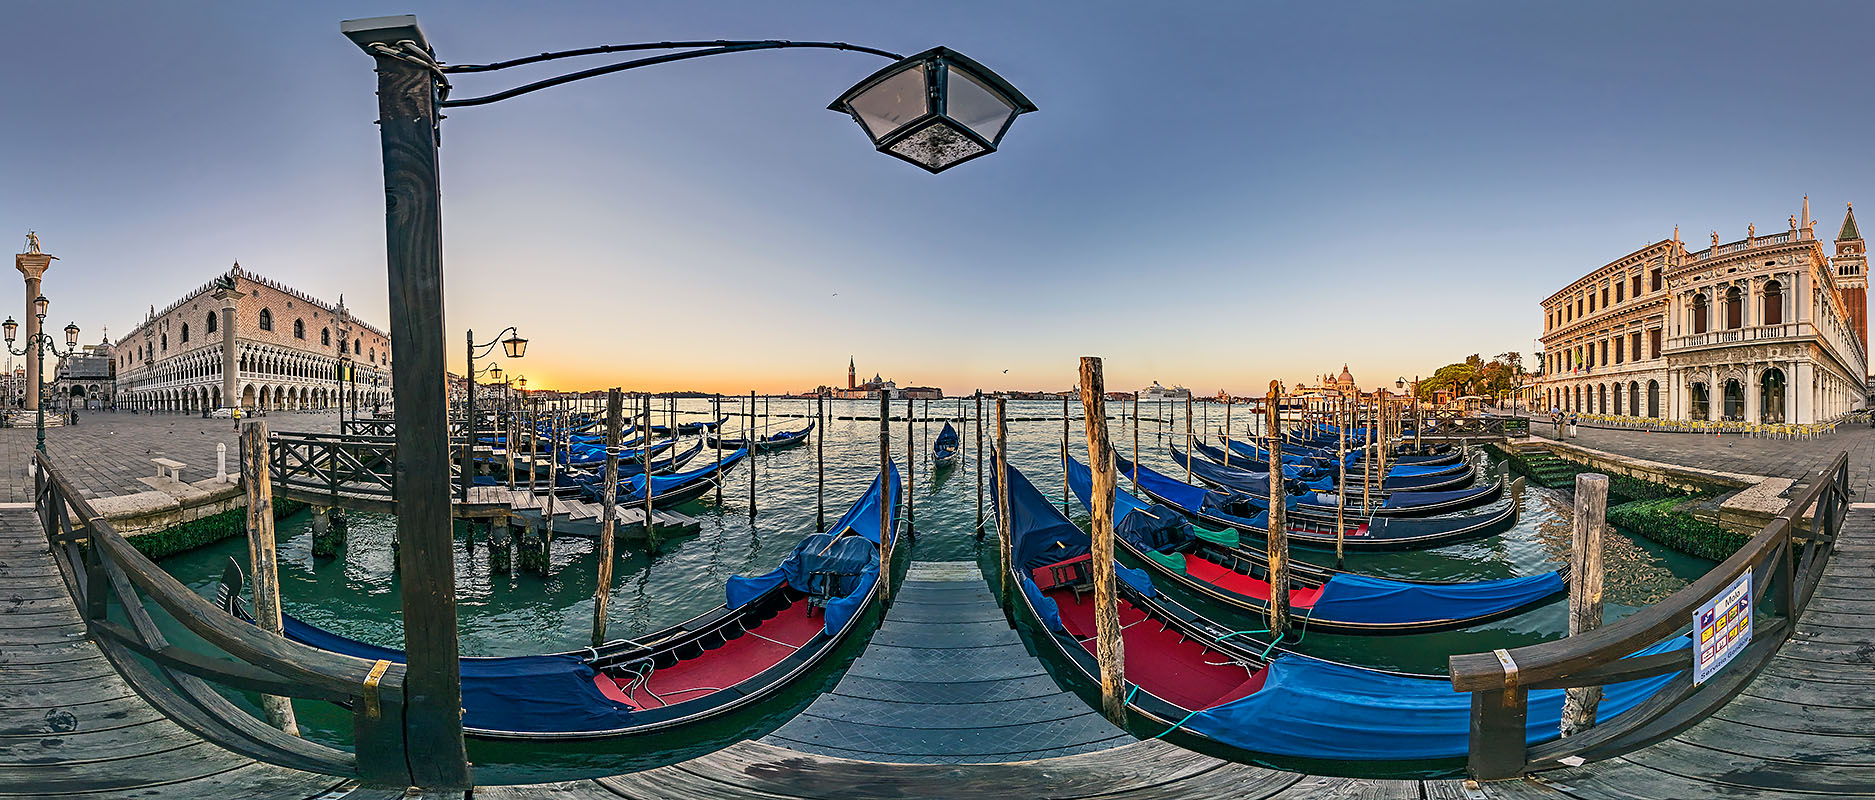 Gondolas: Venice at dawn